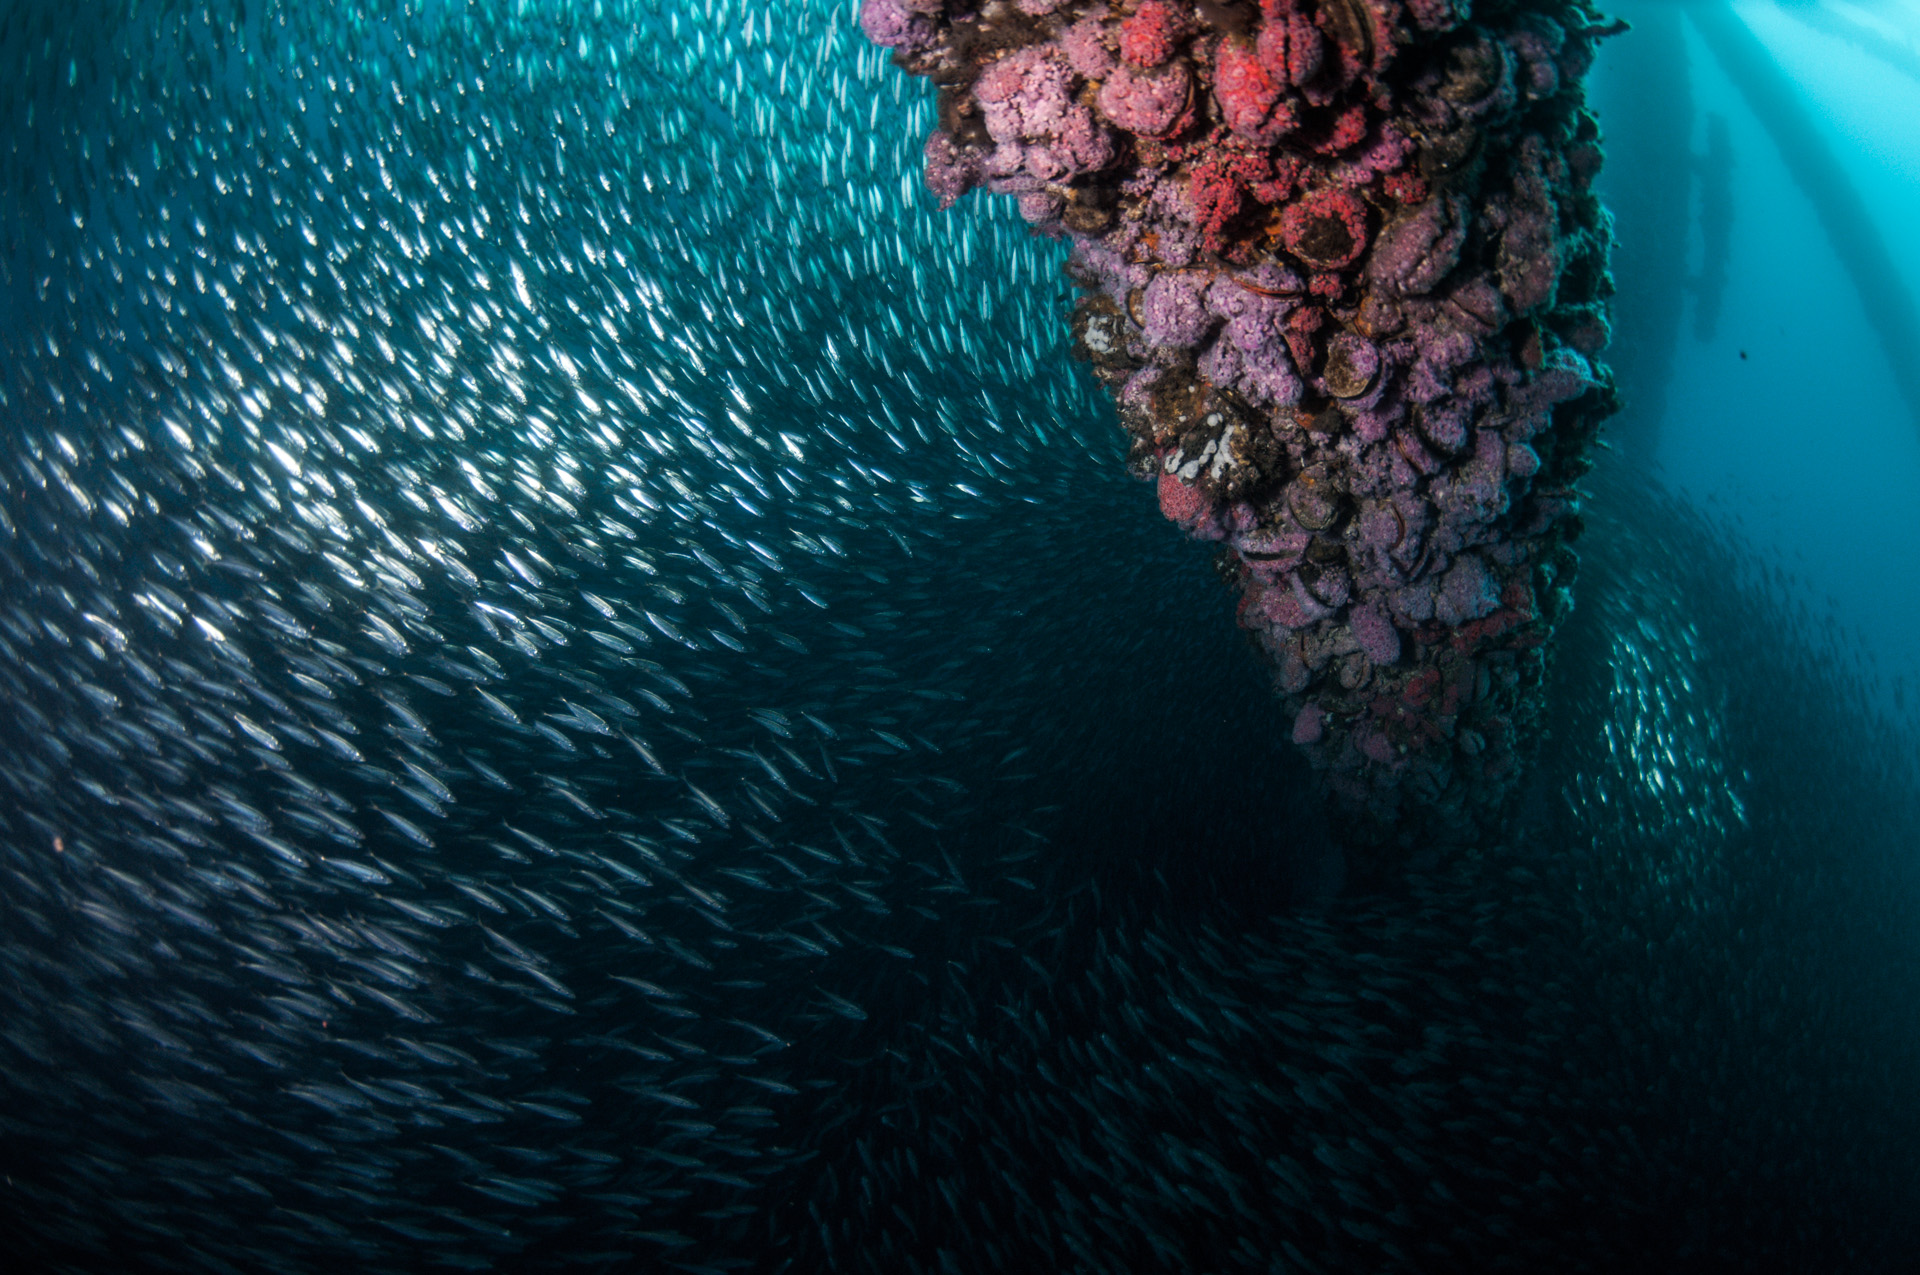 Jack mackerel swarm around Platform Eureka's invertebrate-covered legs. (Photo: Caine Delacy)